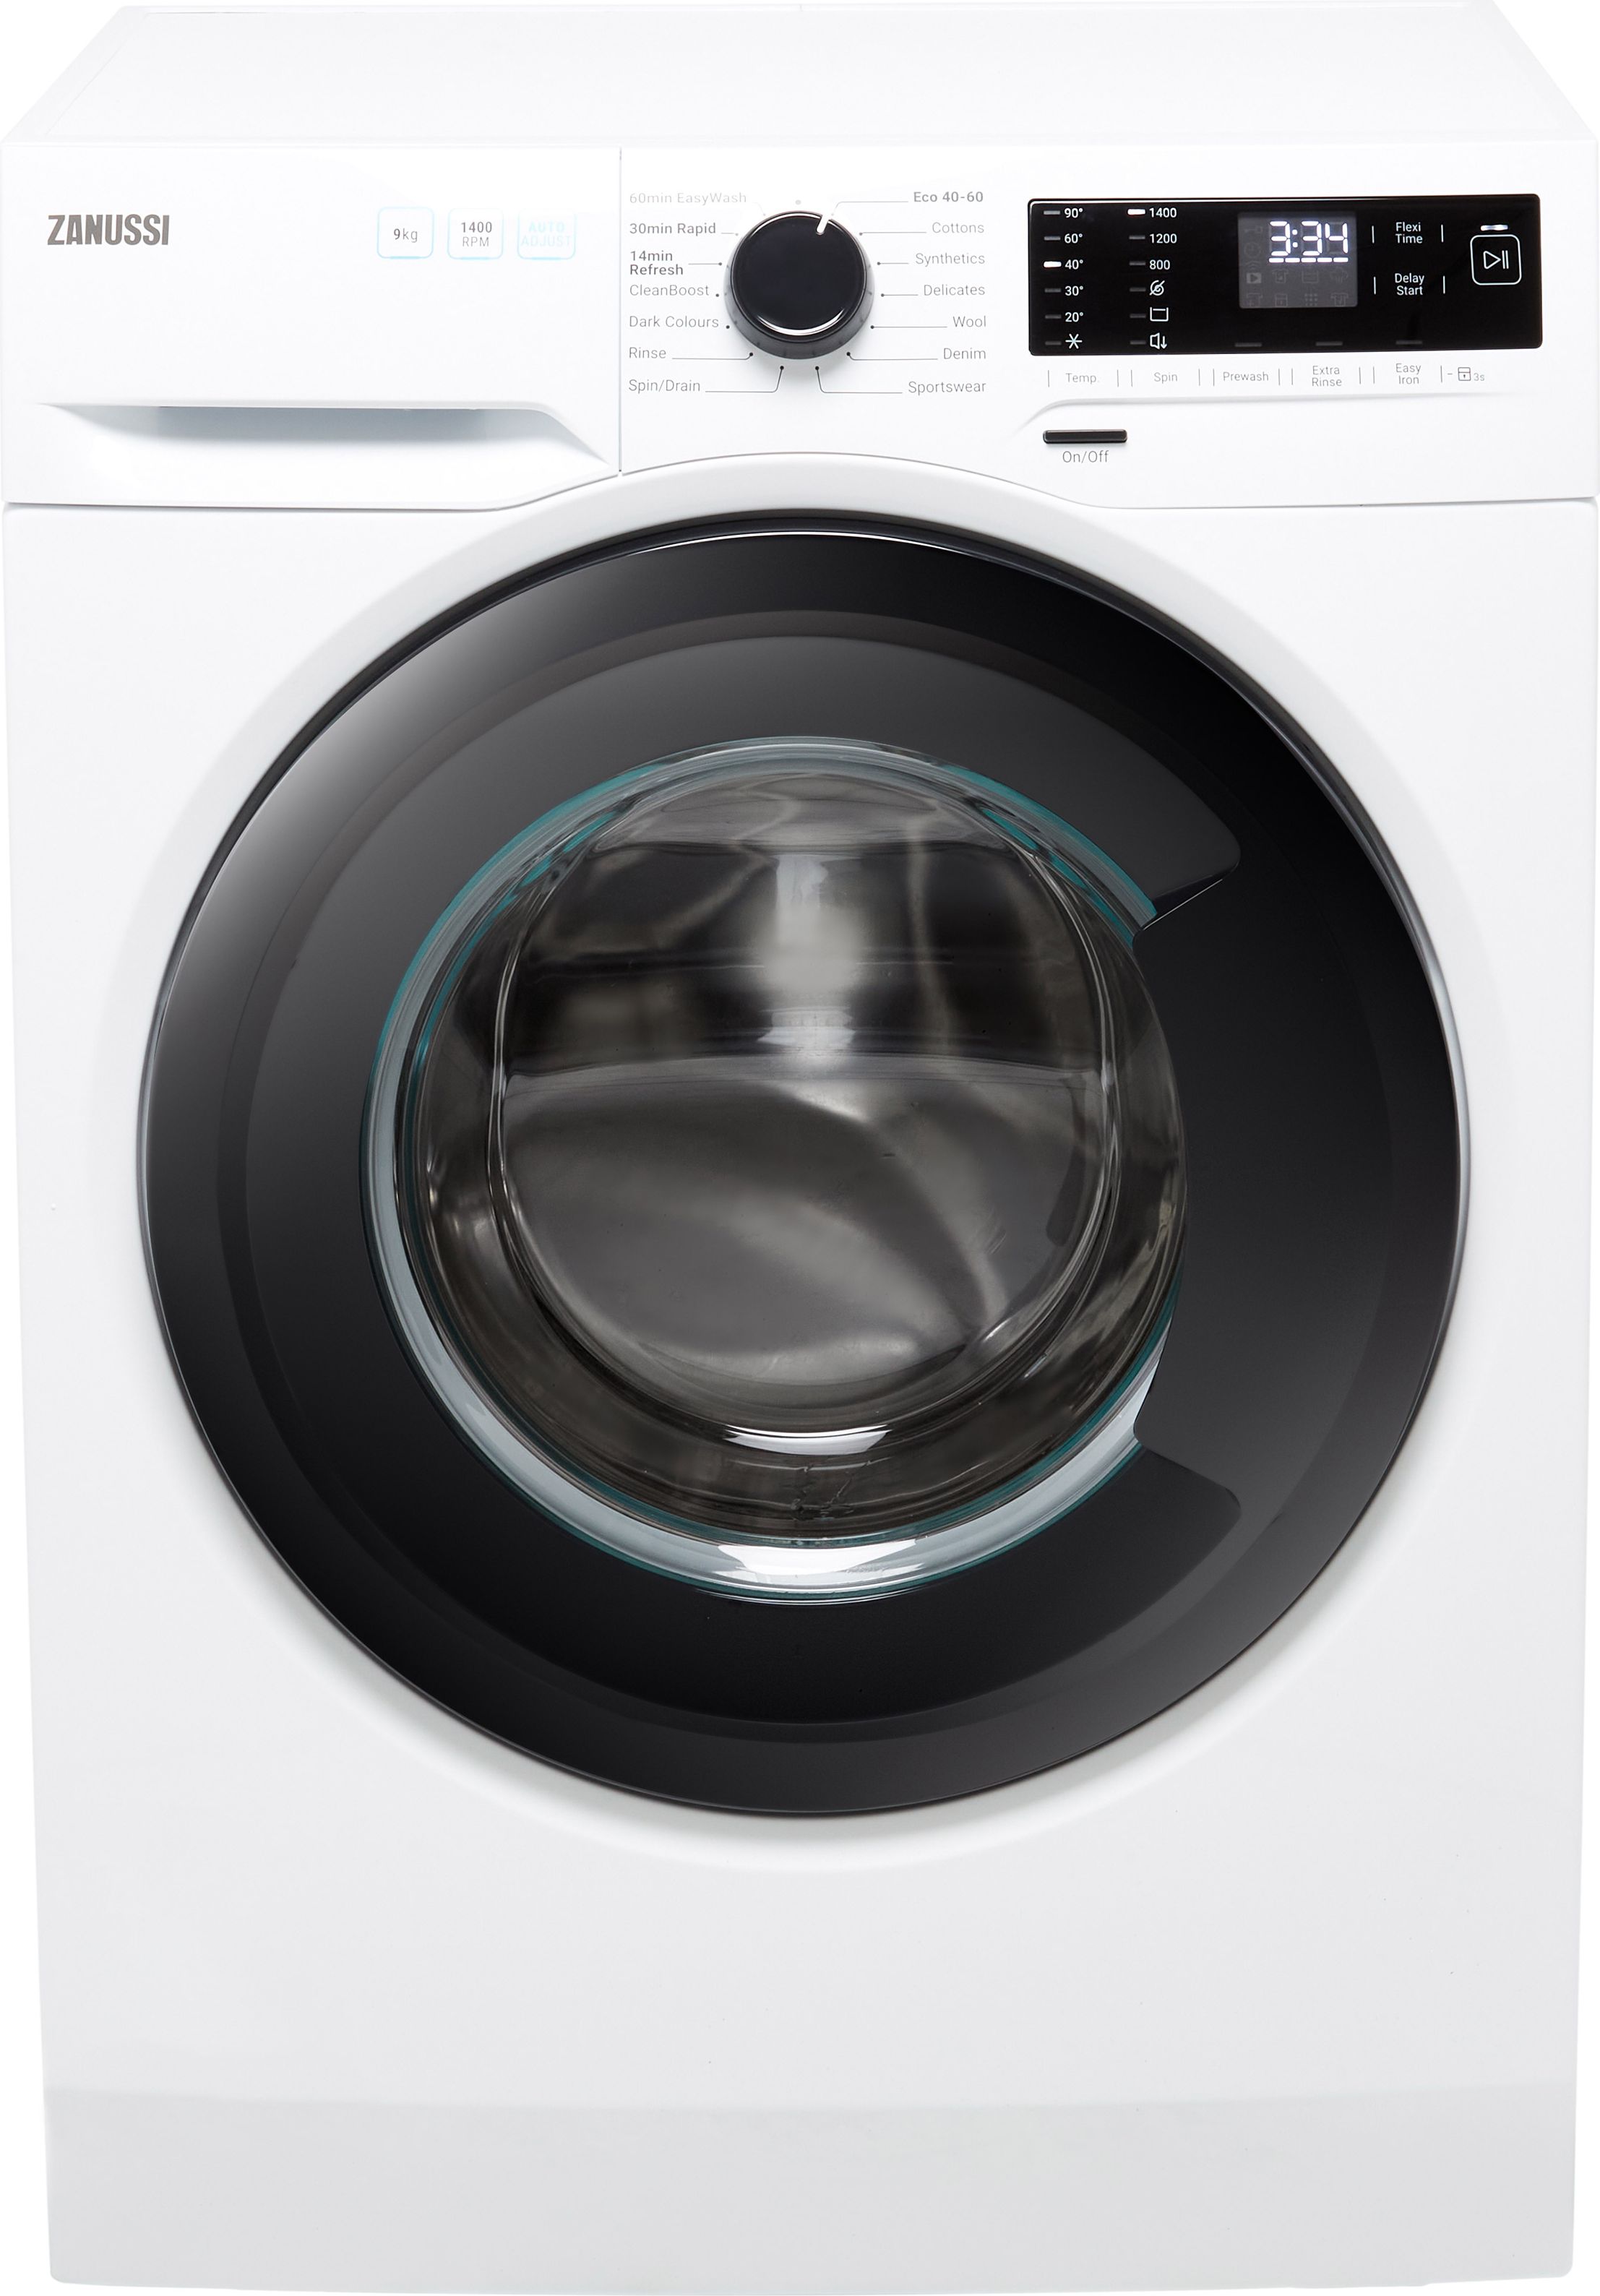 Zanussi ZWF942F1DG 9kg Washing Machine with 1400 rpm - White - A Rated, White